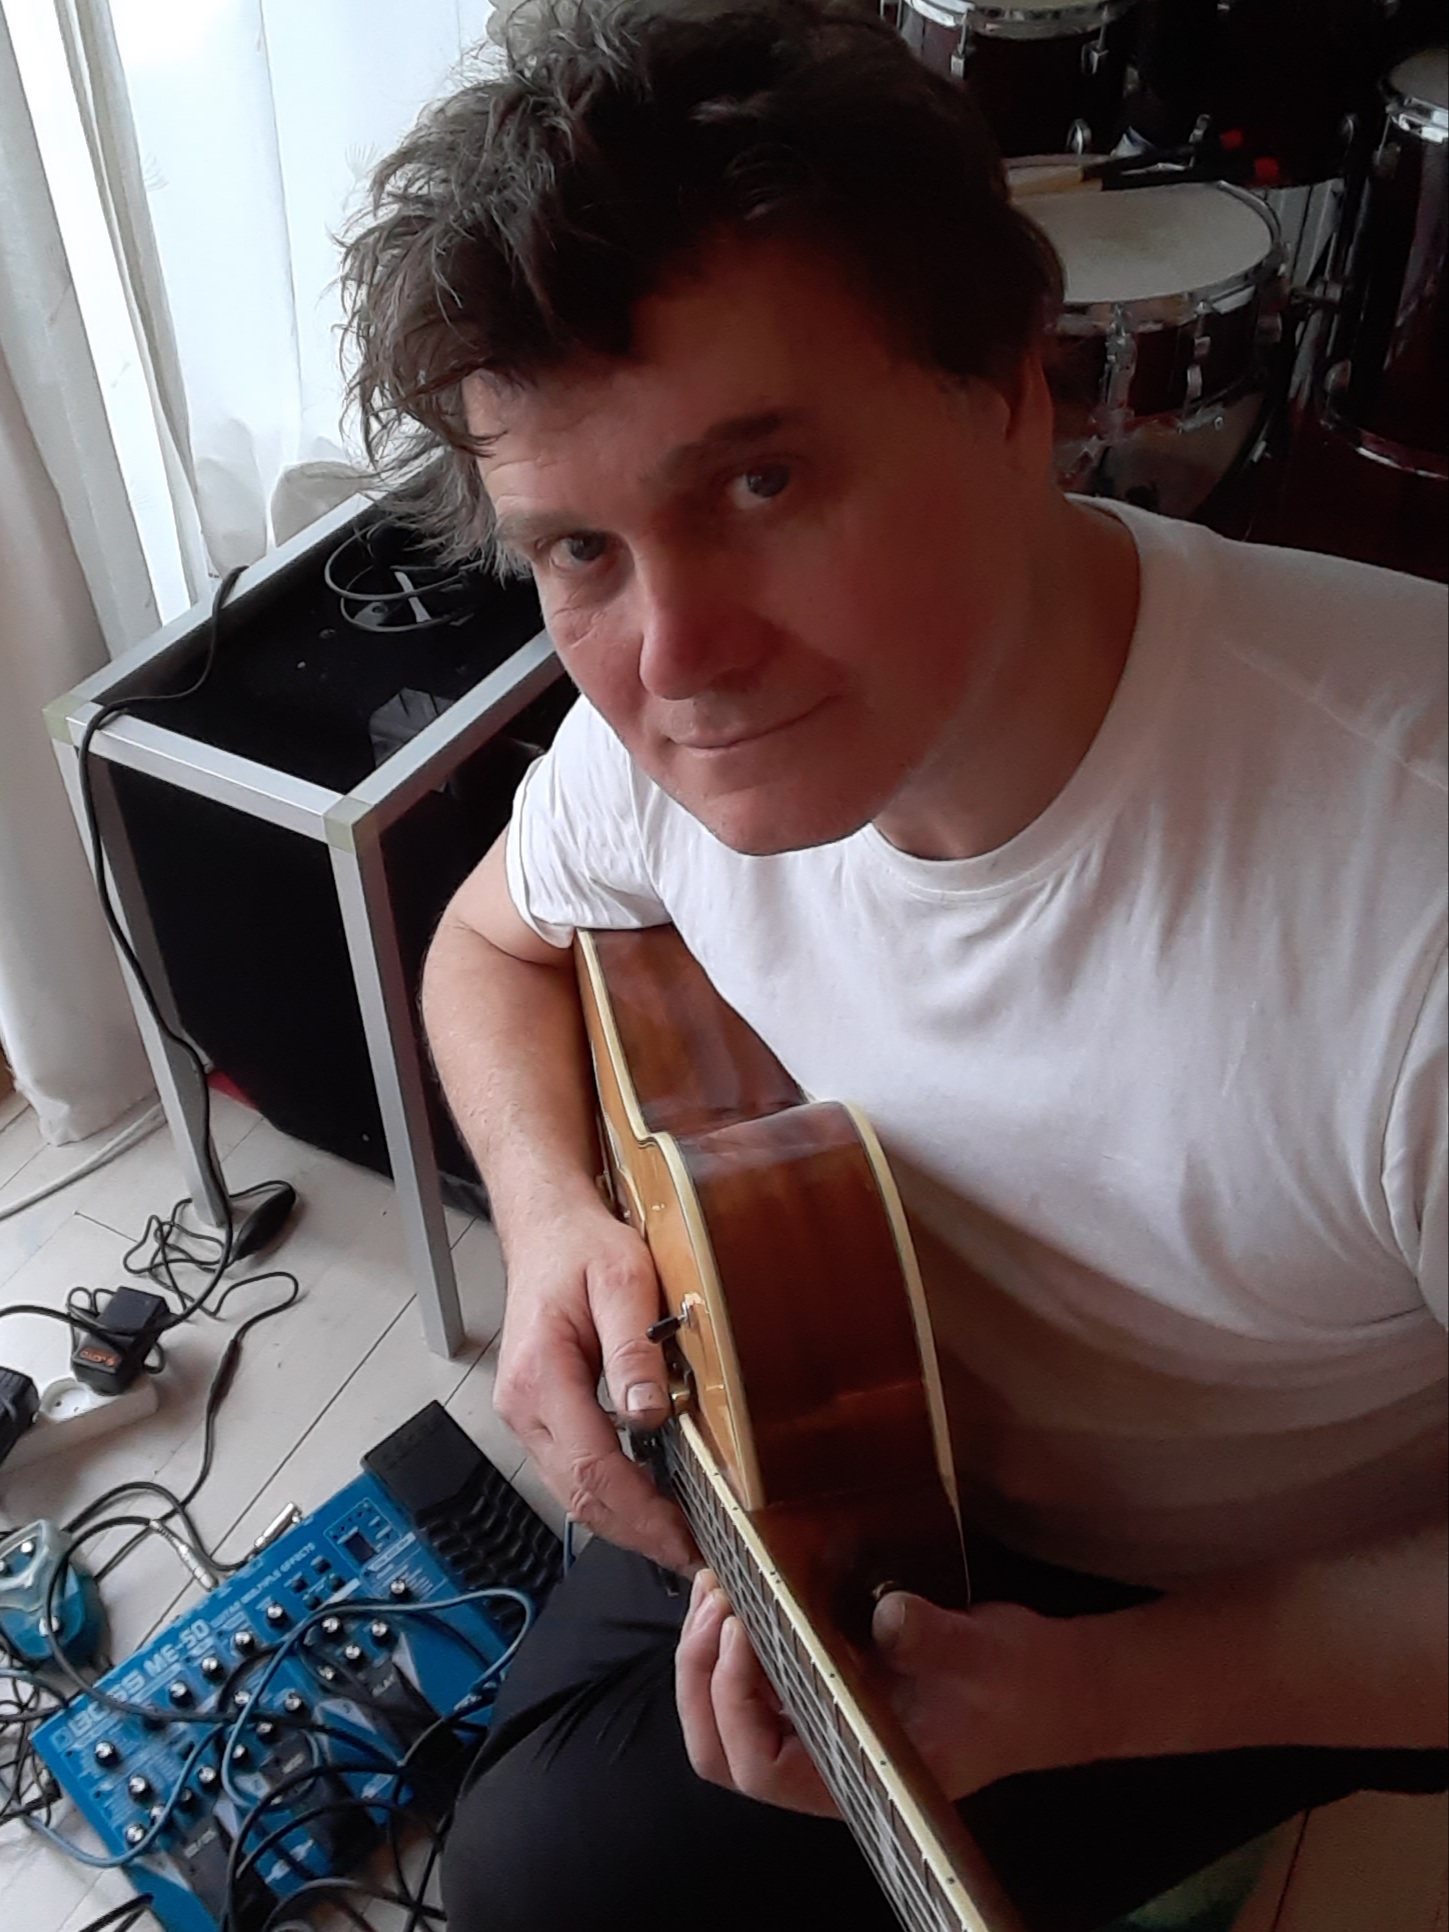 Picture of Dom Elias a.k.a. Dominik Elias Schlienger playing guitar